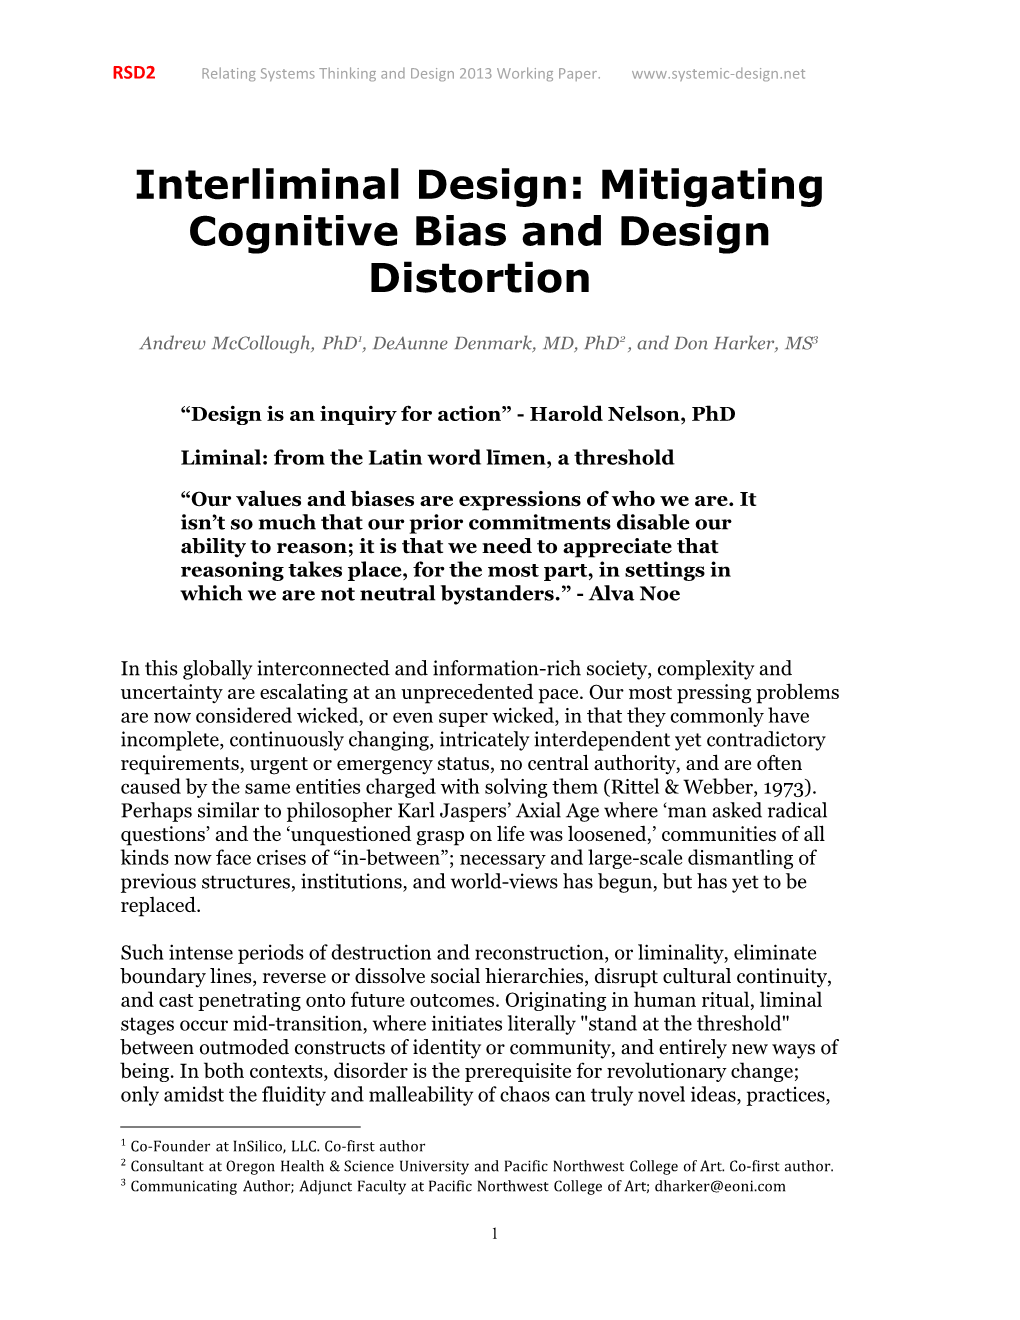 Mitigating Cognitive Bias and Design Distortion